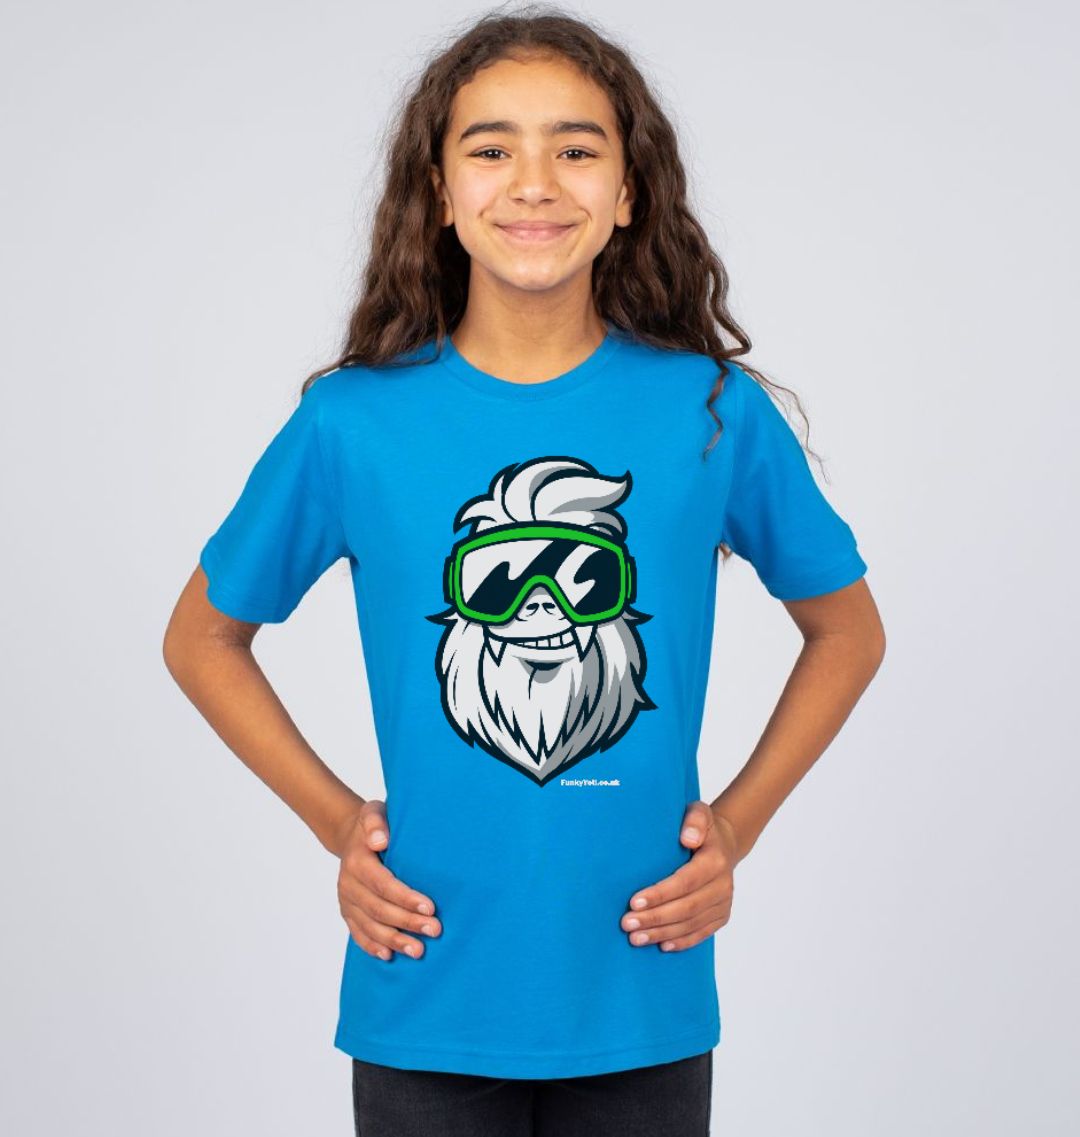 Kids Tee - Blue Organic Cotton T-shirt with Big Funky Yeti logo print